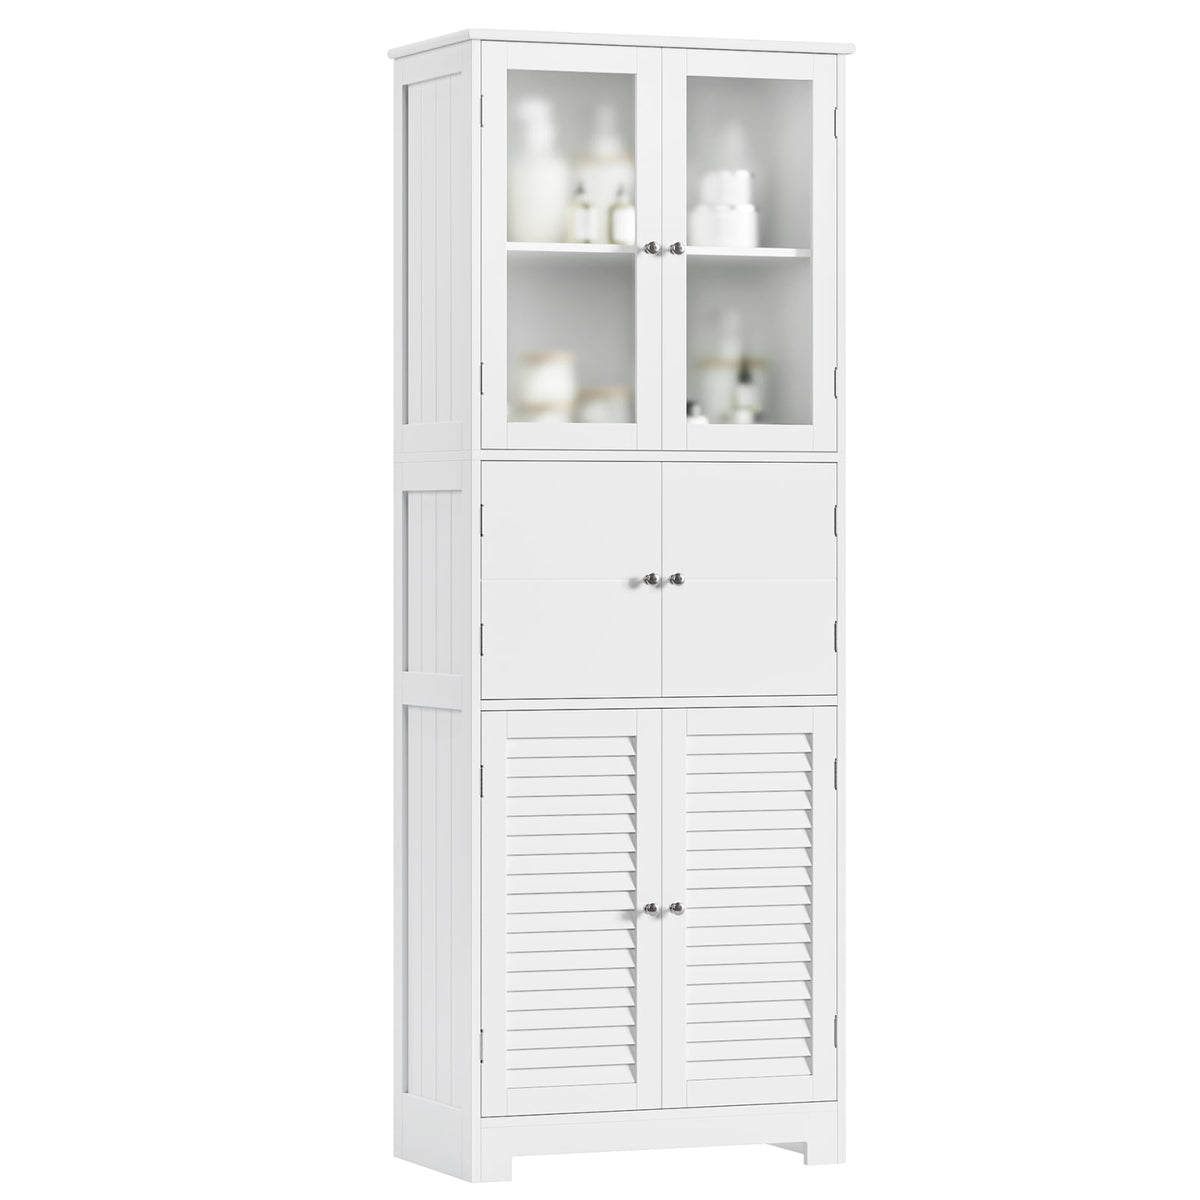 Homfa 3-Drawer Kitchen Storage Cabinet, 76.6'' Tall Cabinet with